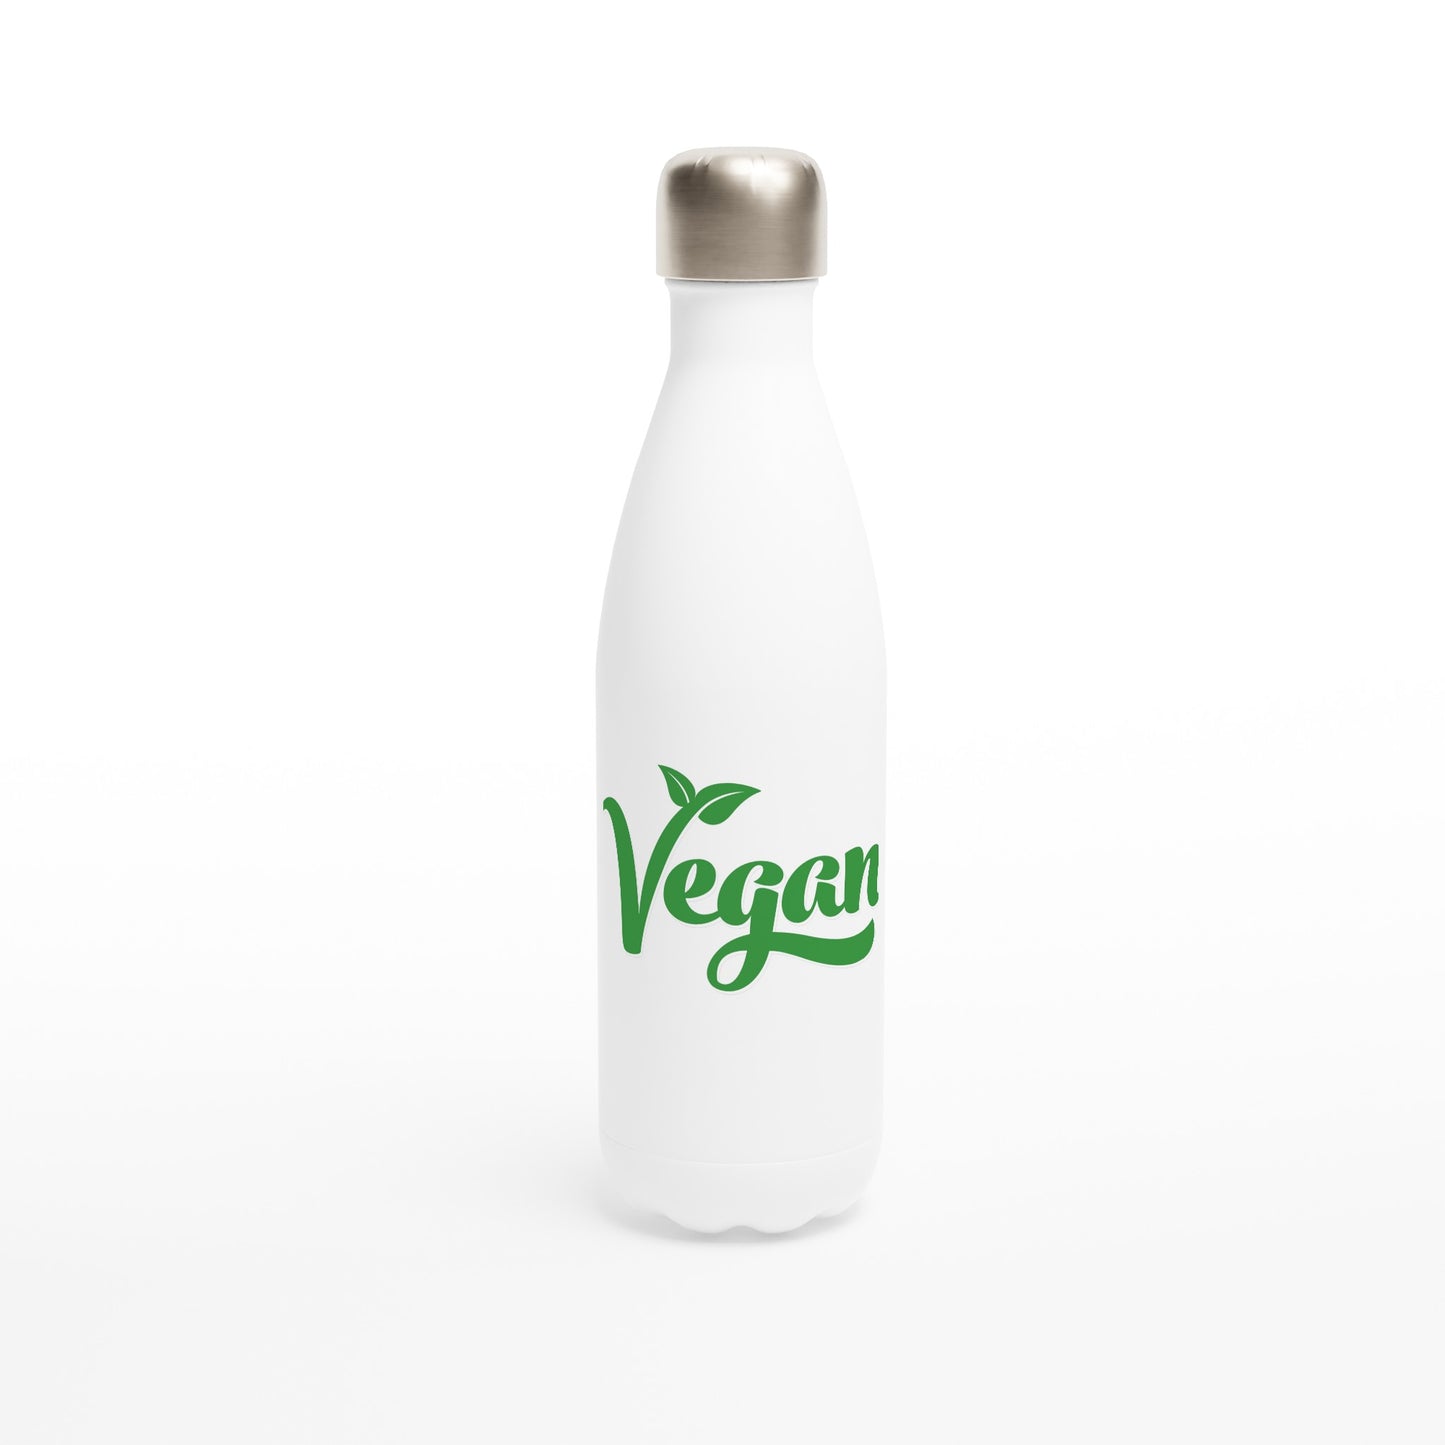 Vegan - 17oz Stainless Steel Water Bottle